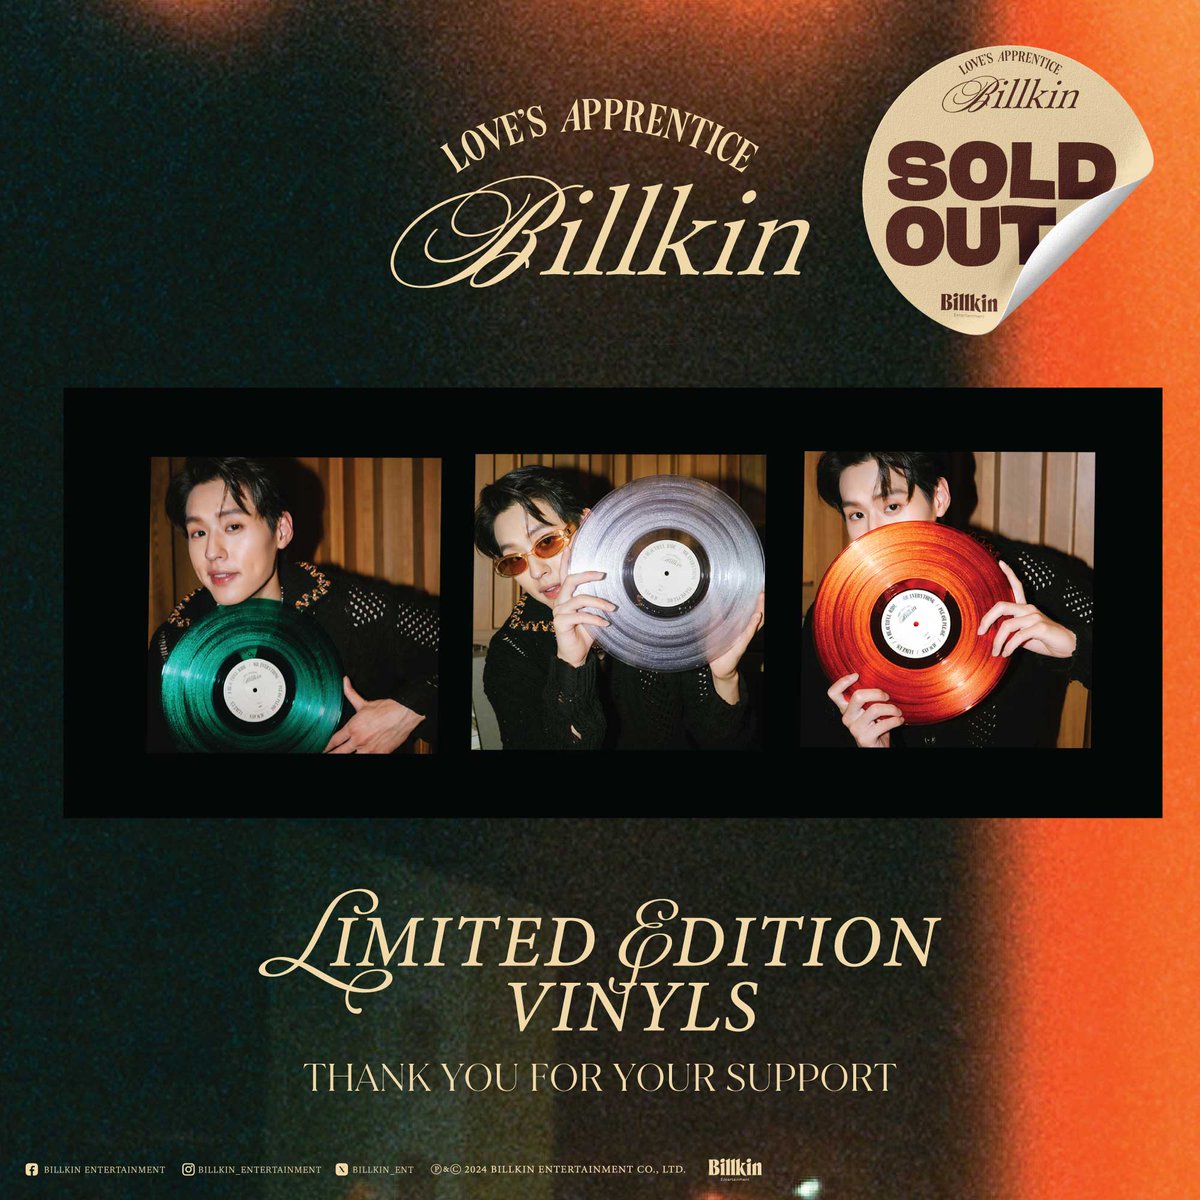 EP Love's Apprentice - Limited Edition Vinyls are sold out! 🎶🧡 #Billkin_LovesApprentice — Black Vinyl ยังเปิดให้ Pre-order อยู่นะ 🗓️ ตั้งแต่วันนี้ - 1 มิถุนายน 2567 🛒 ช่องทางการสั่งซื้อสินค้า: waawbkk.com #BillkinEntertainment #Bbillkin